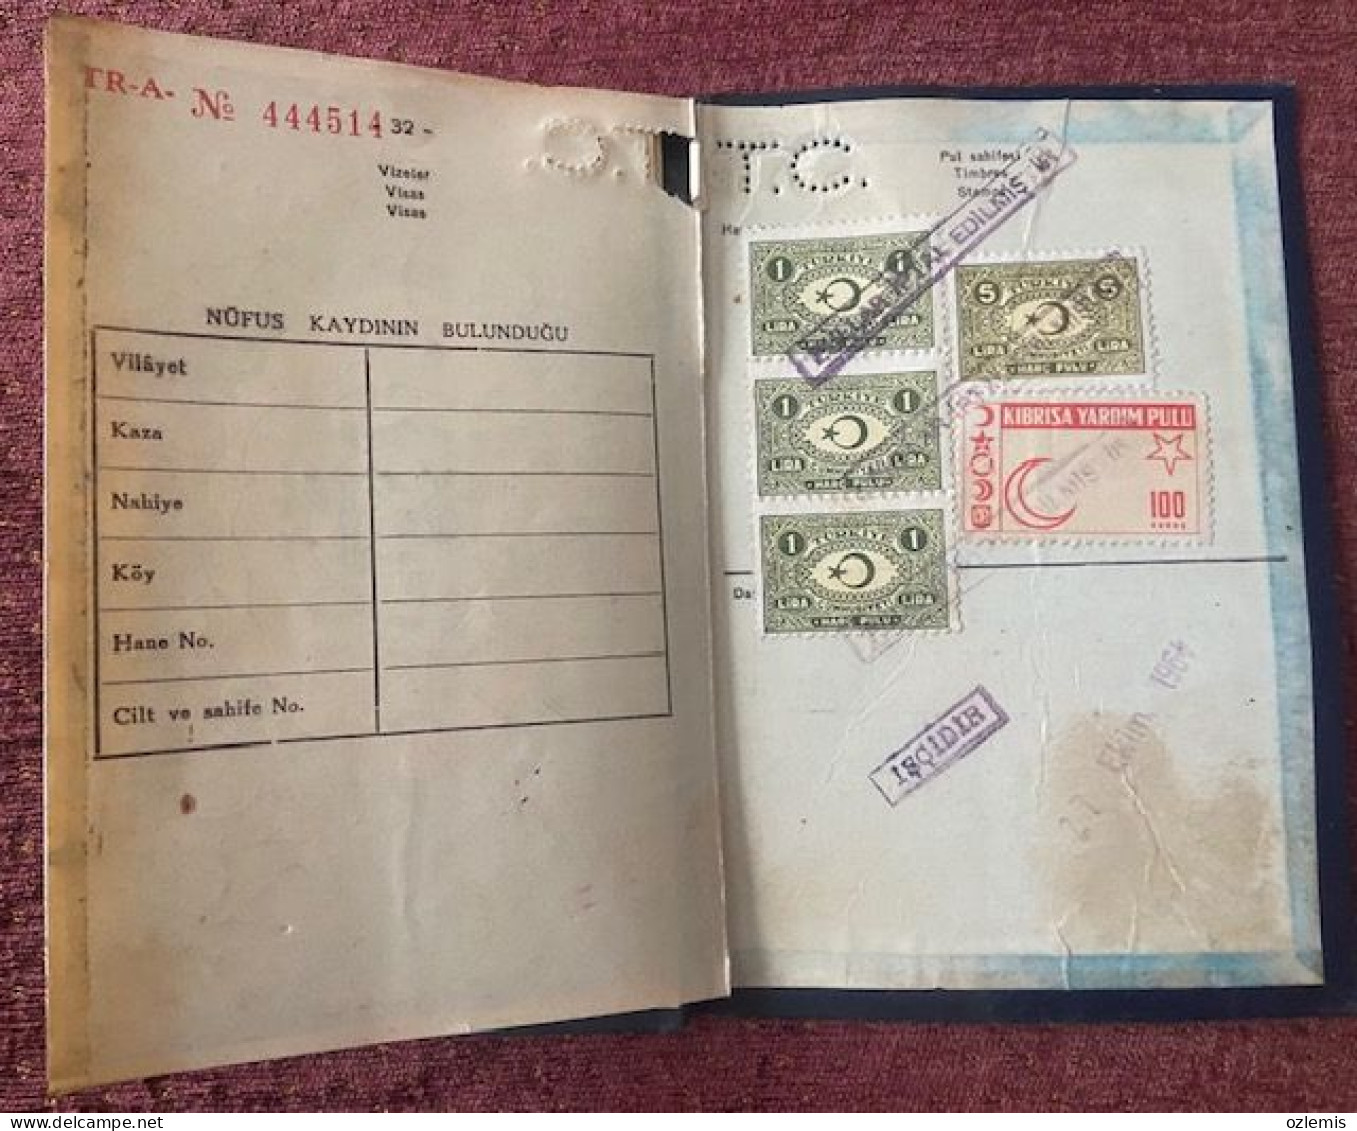 PASSPORT  PASSEPORT, 1964  ,USED,DEUTSCHLAND,YOUGOSLAVIA ,,VİSA AND FISCAL